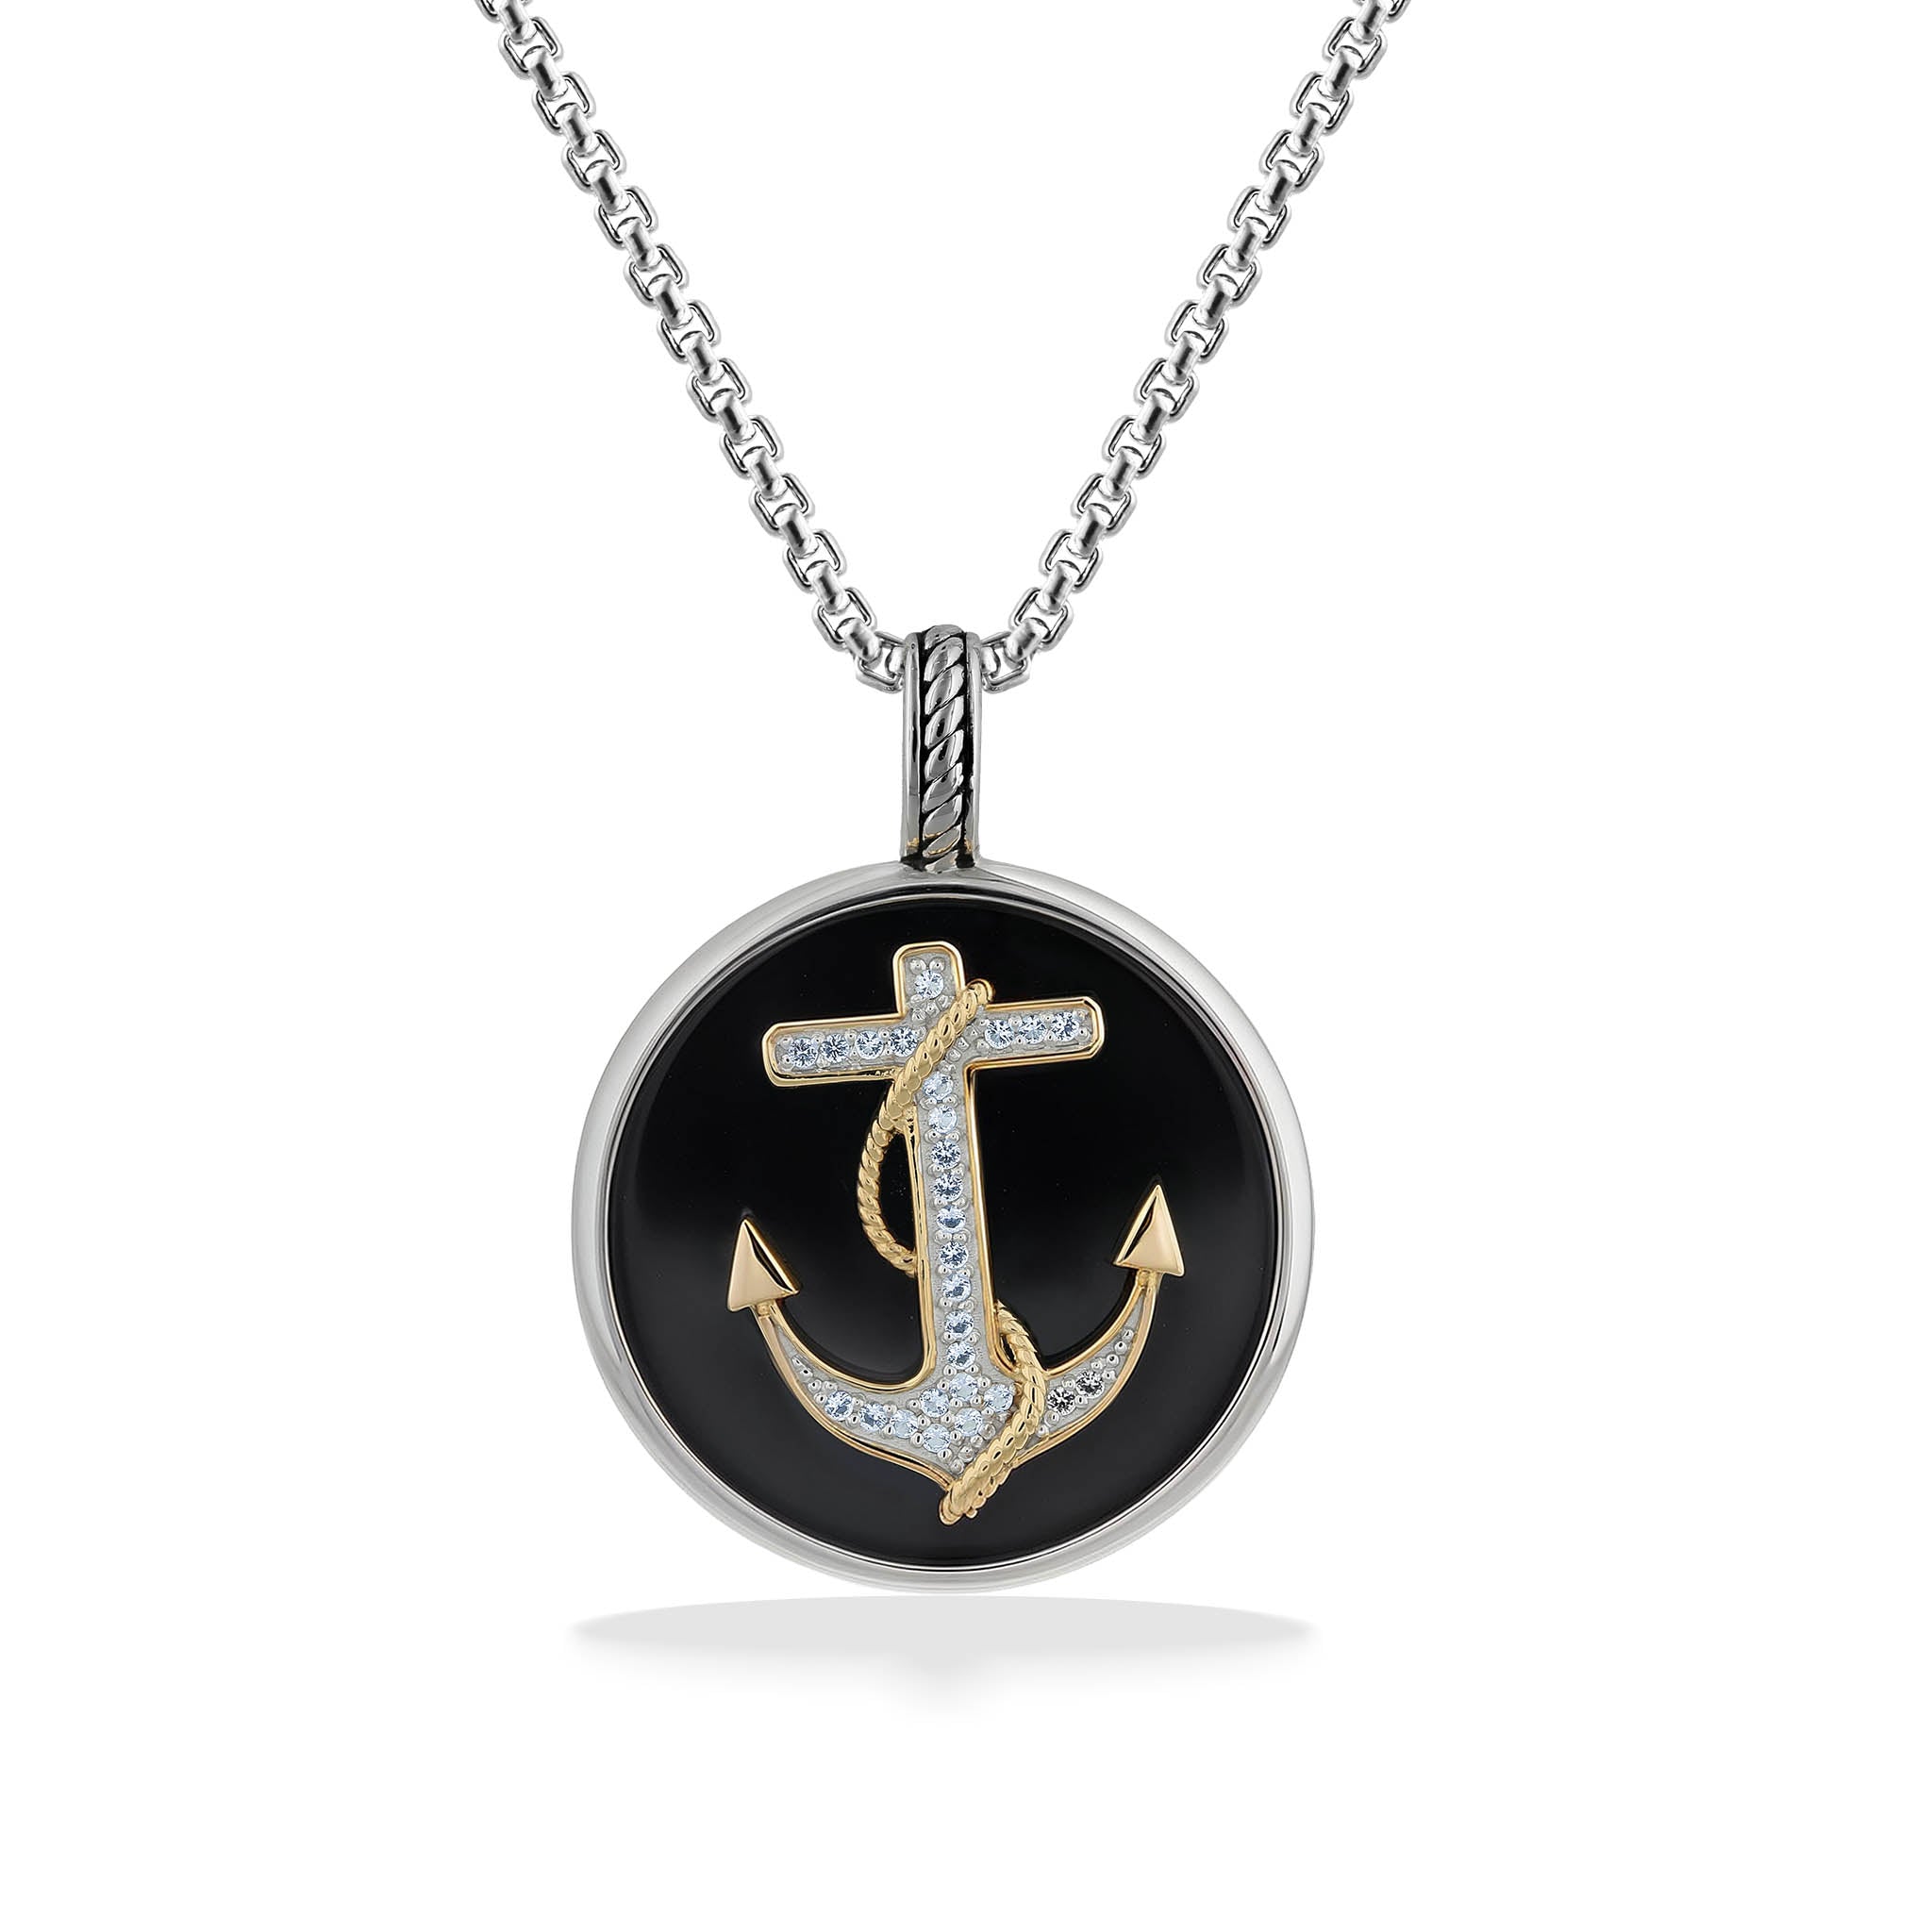 NIP Silver Tone EFFY Ship ANCHOR Pendant Necklace - NEW | eBay